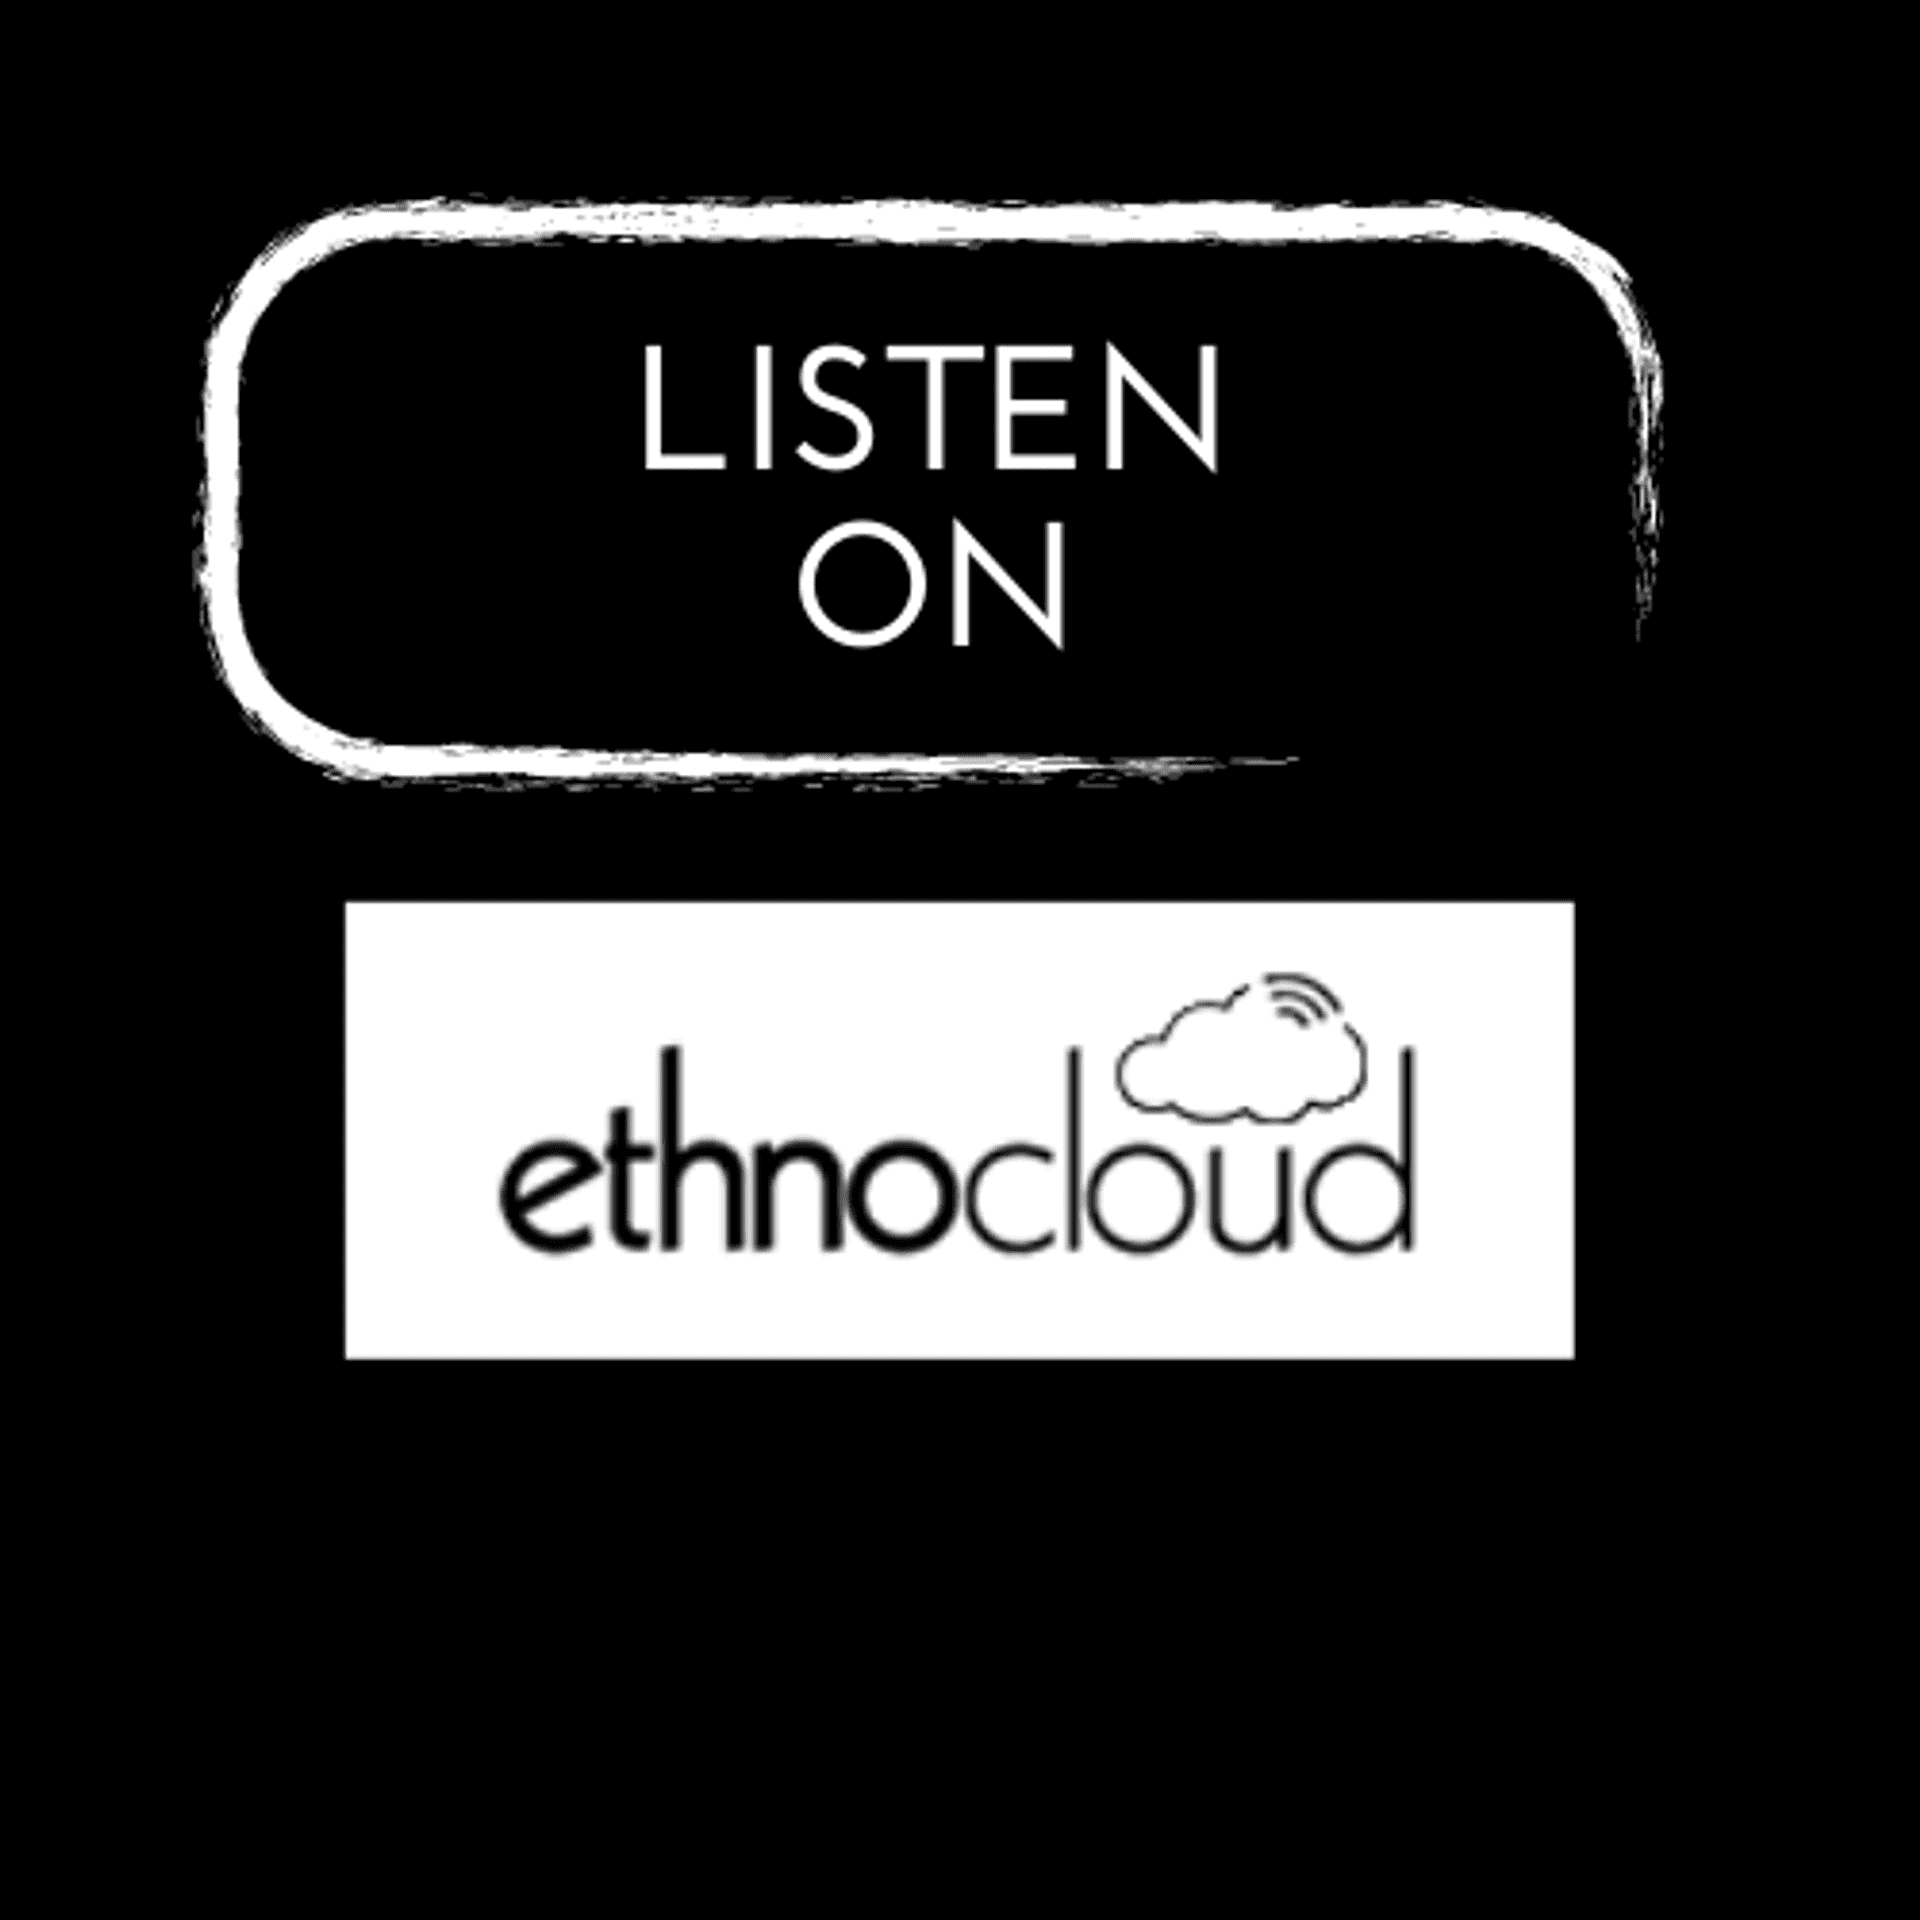 listen on ethnocloud